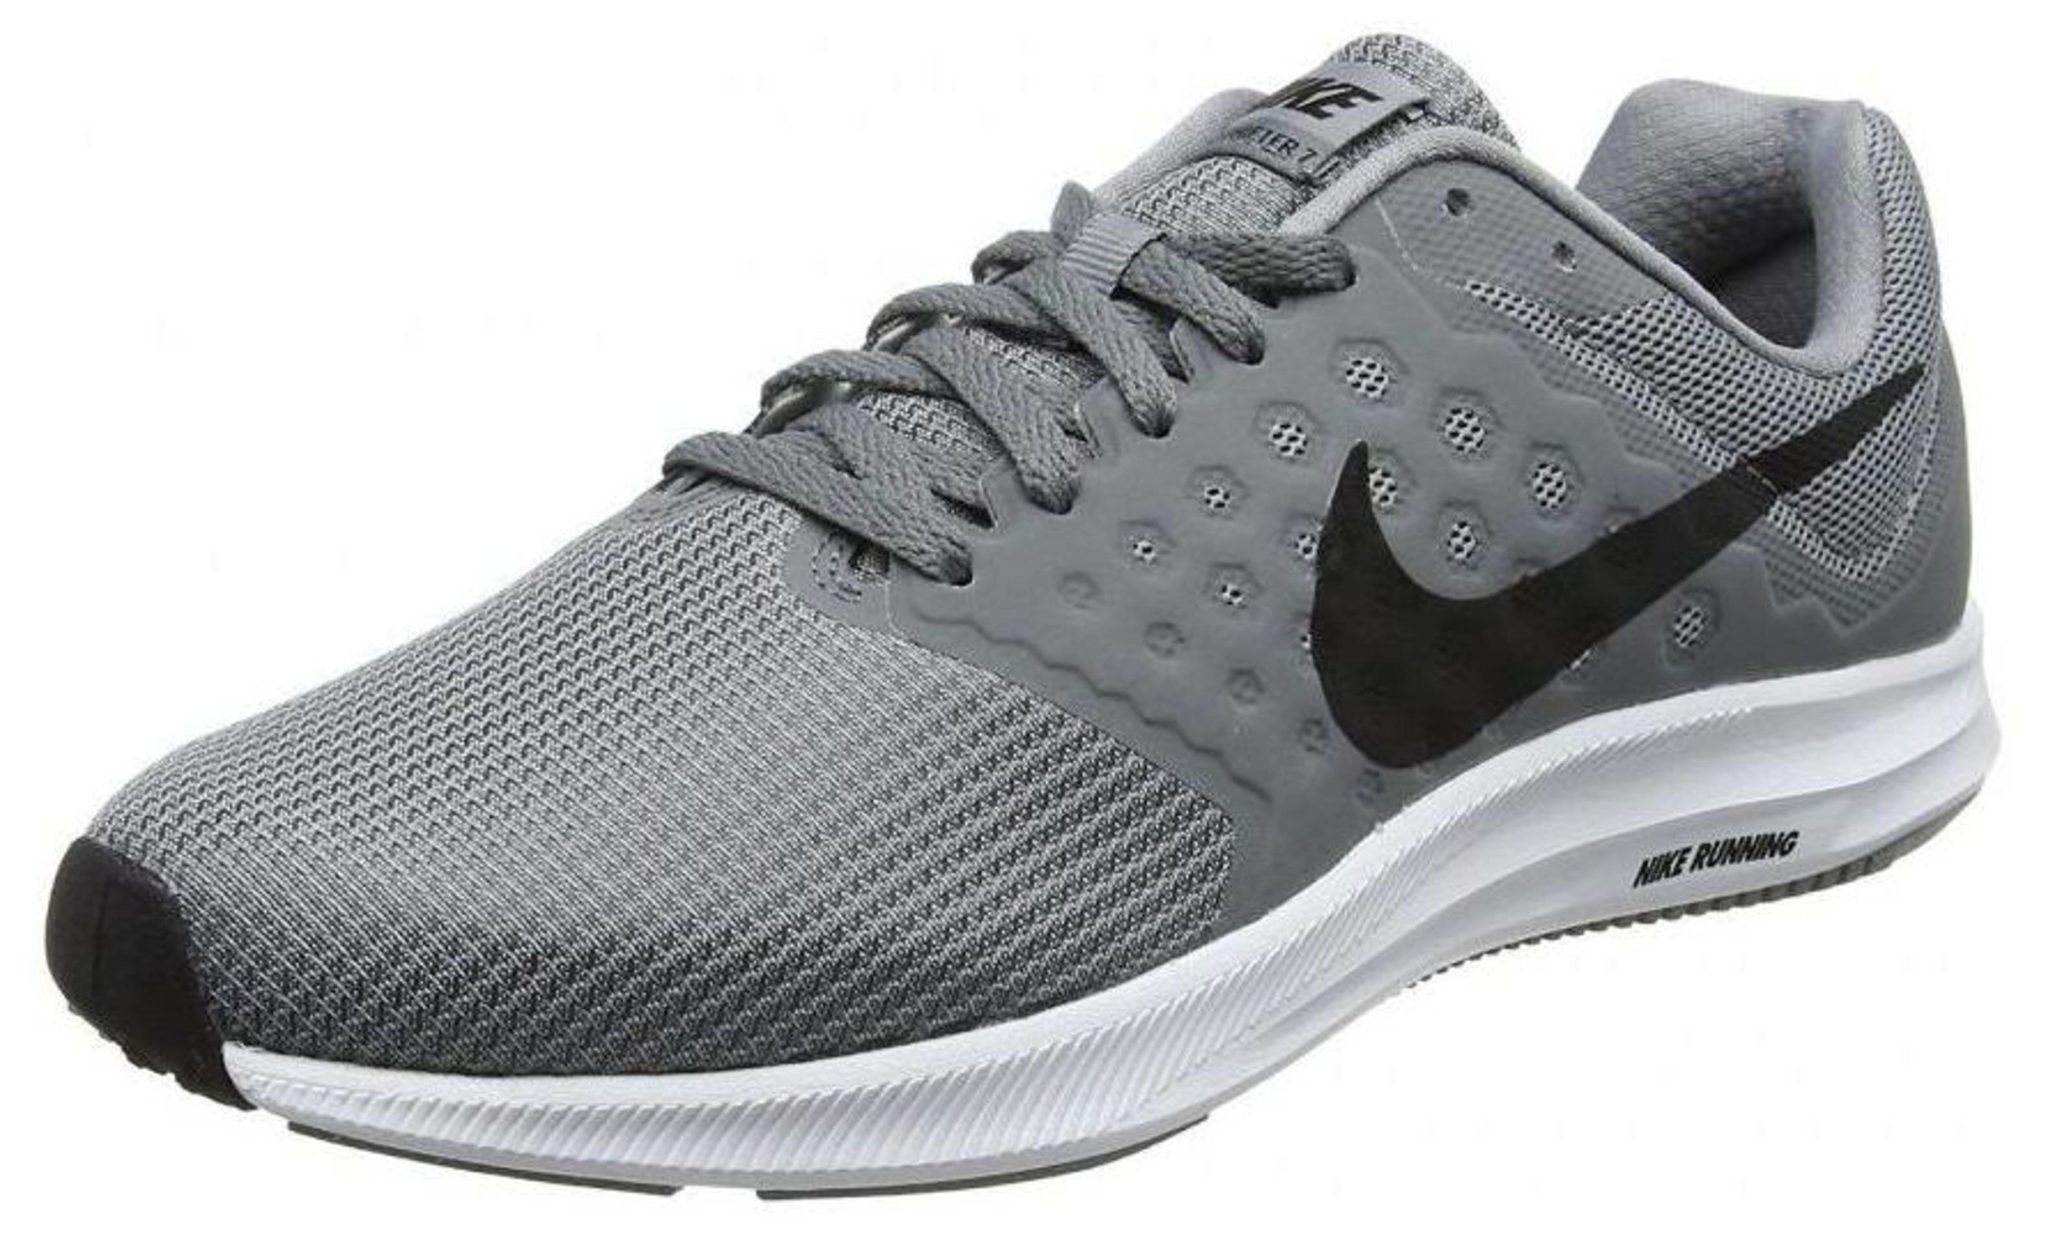 Buy Nike Men's Gray Sports Shoe Online - Get 44% Off